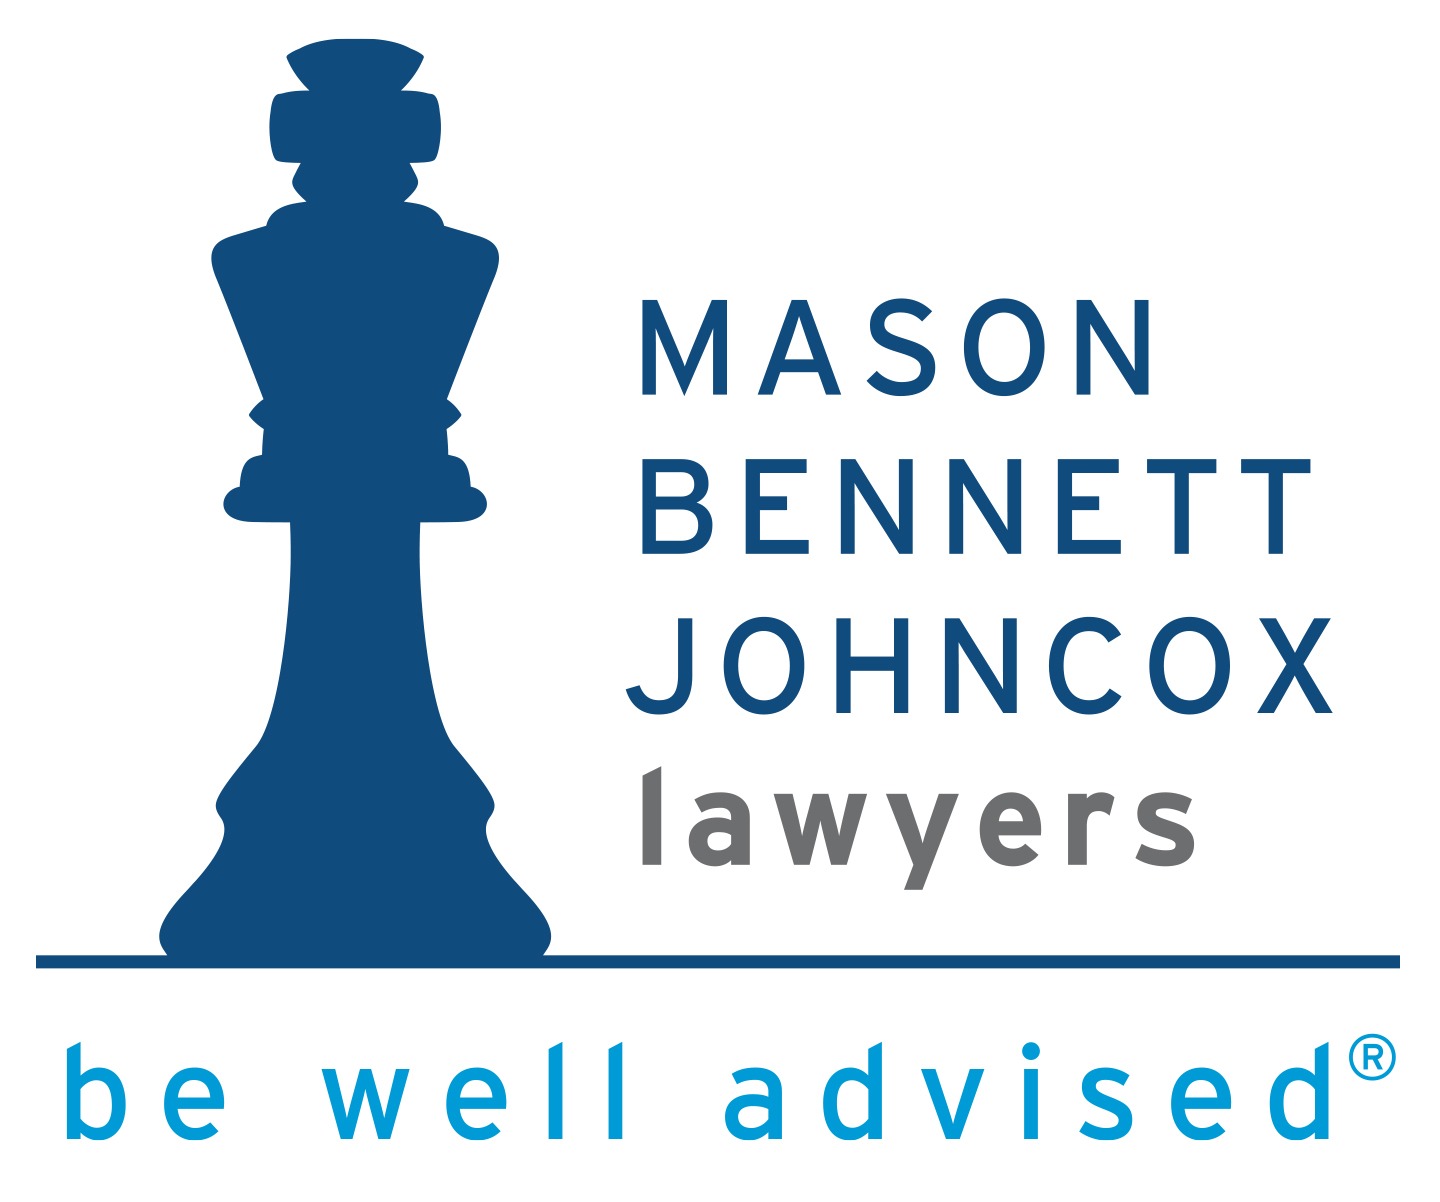 Mason Bennett Johncox logo.